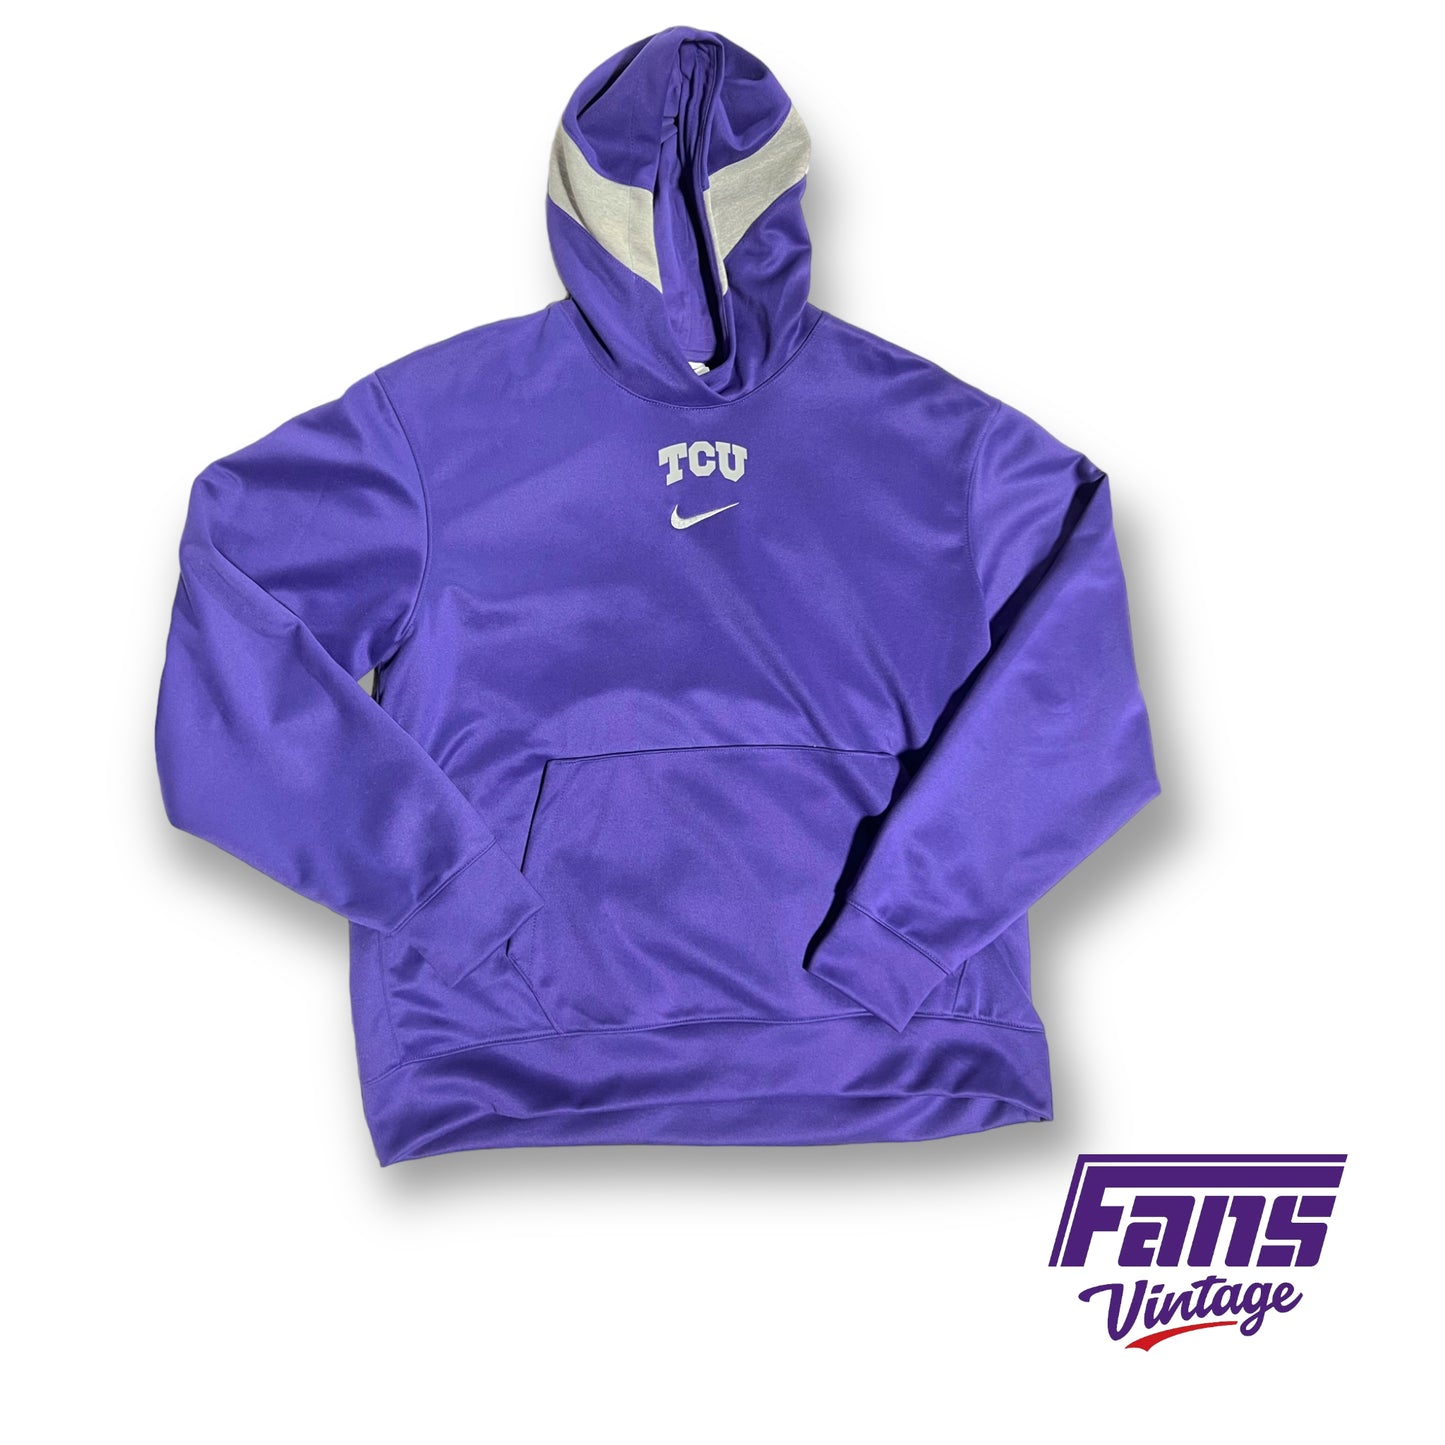 Nike TCU team issued dri-fit hoodie